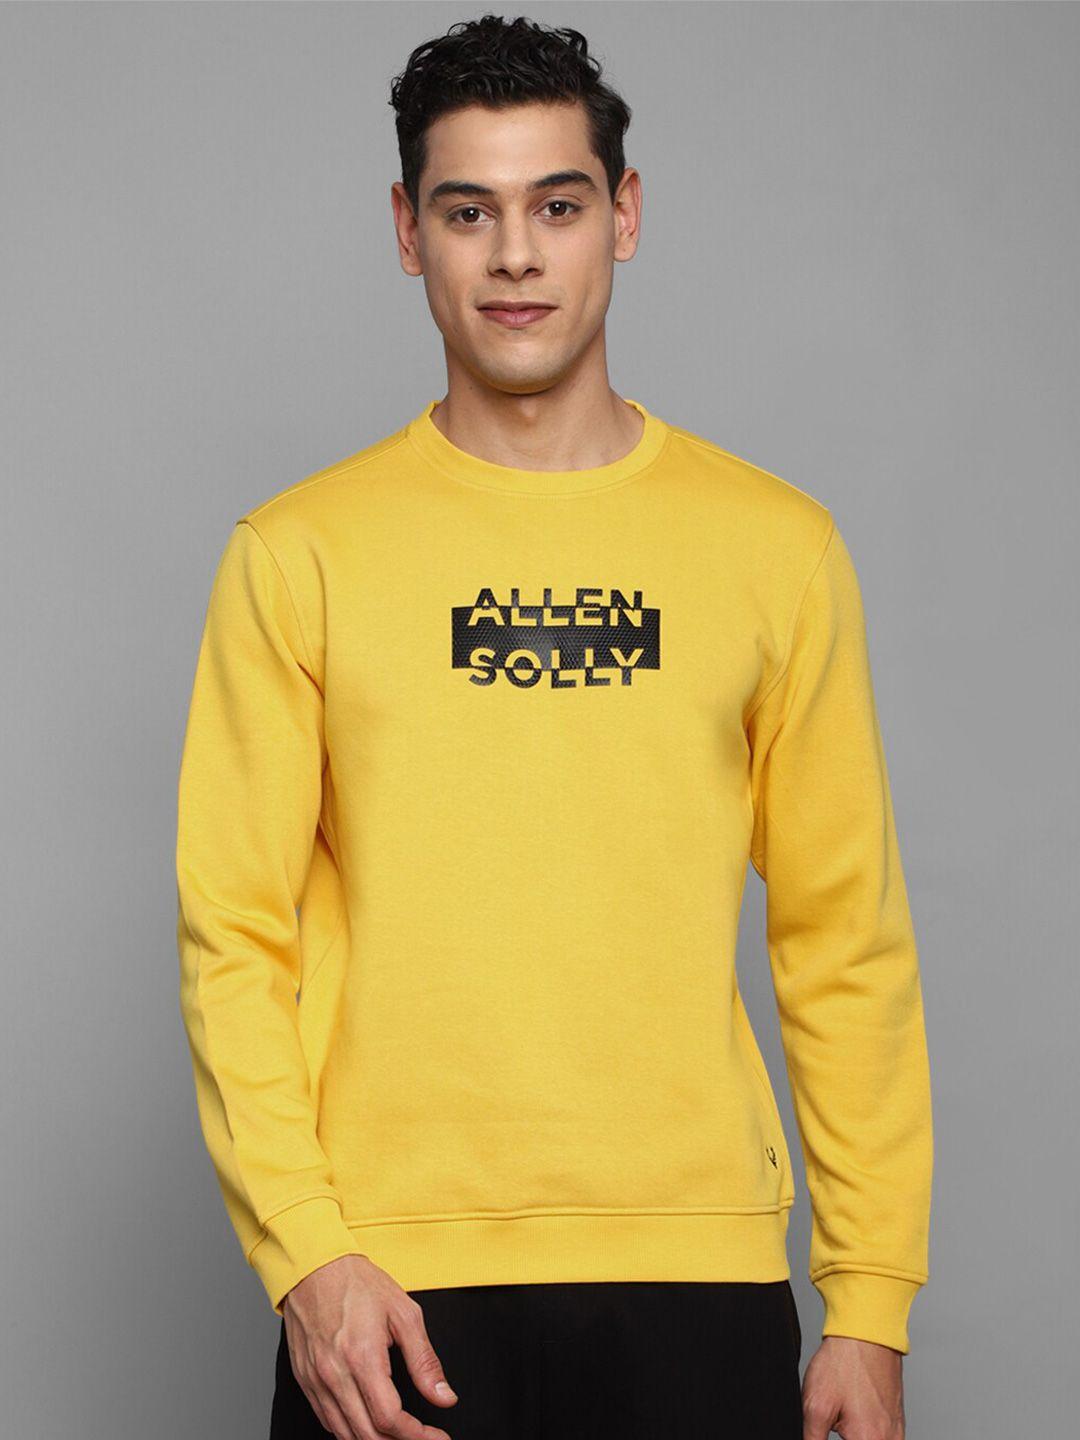 allen-solly-men-yellow-printed-long-sleeves-sweatshirt